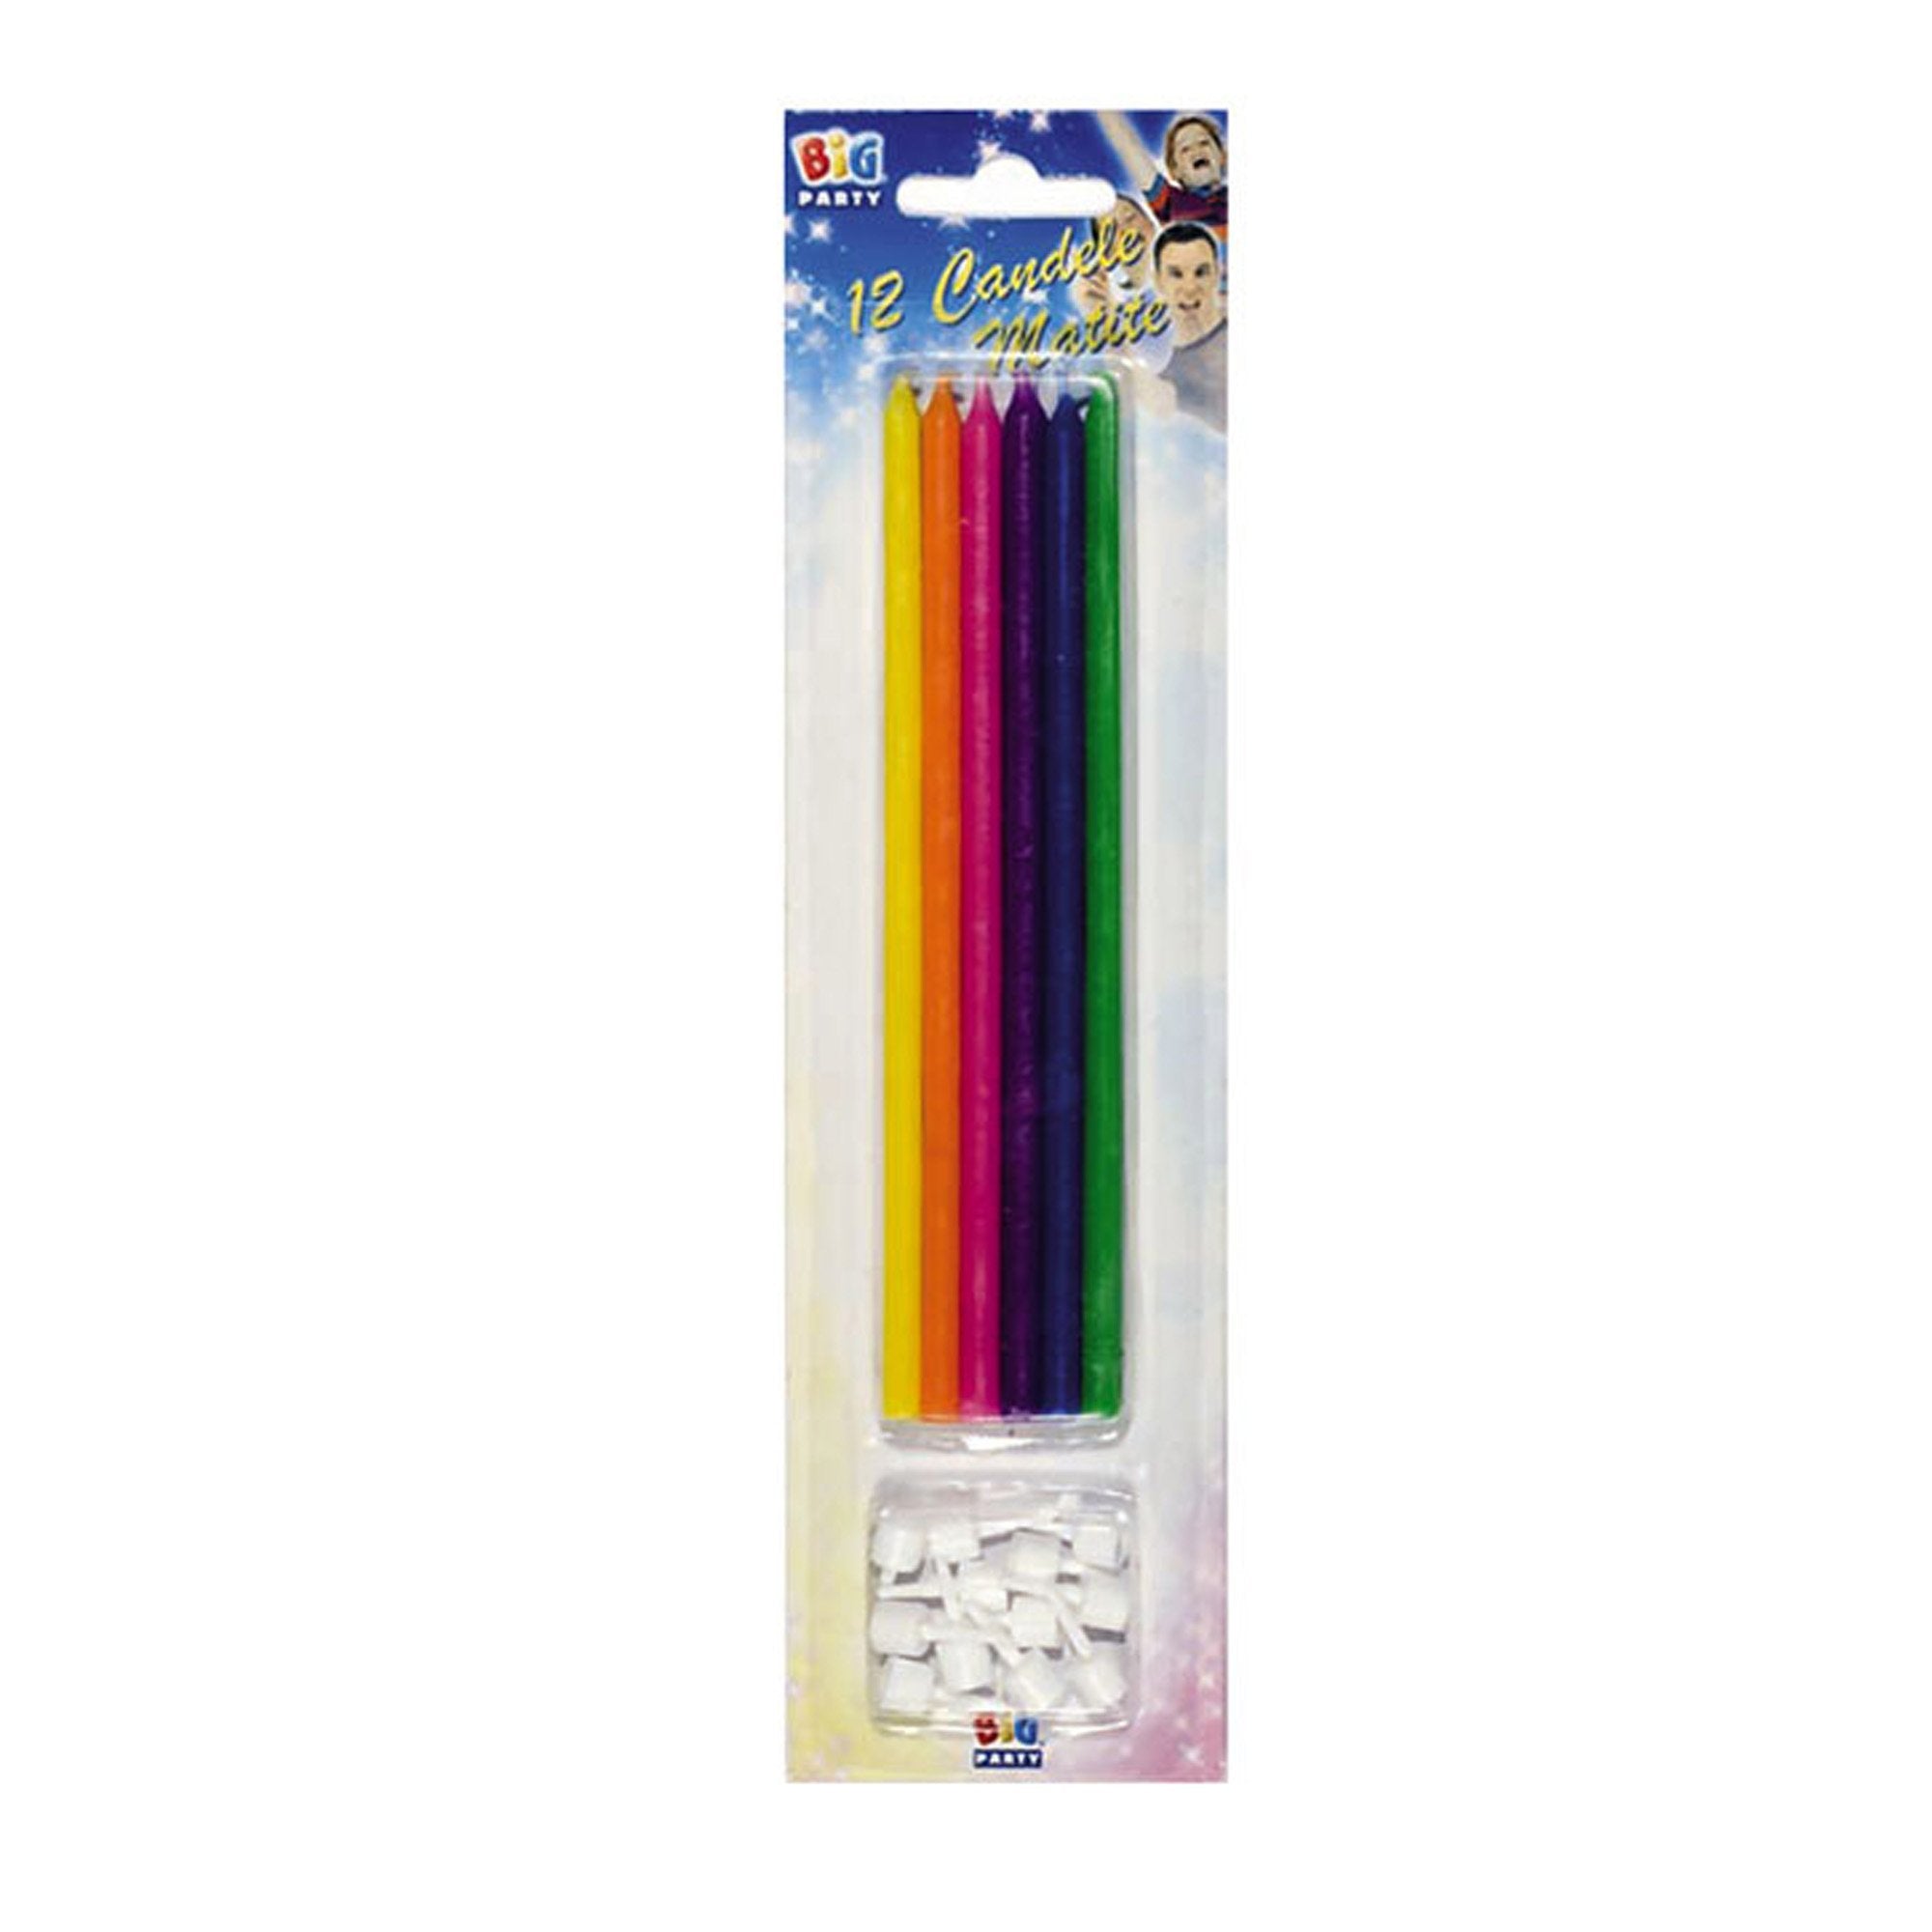 big-party-12-candeline-matite-15cm-colori-assortiti